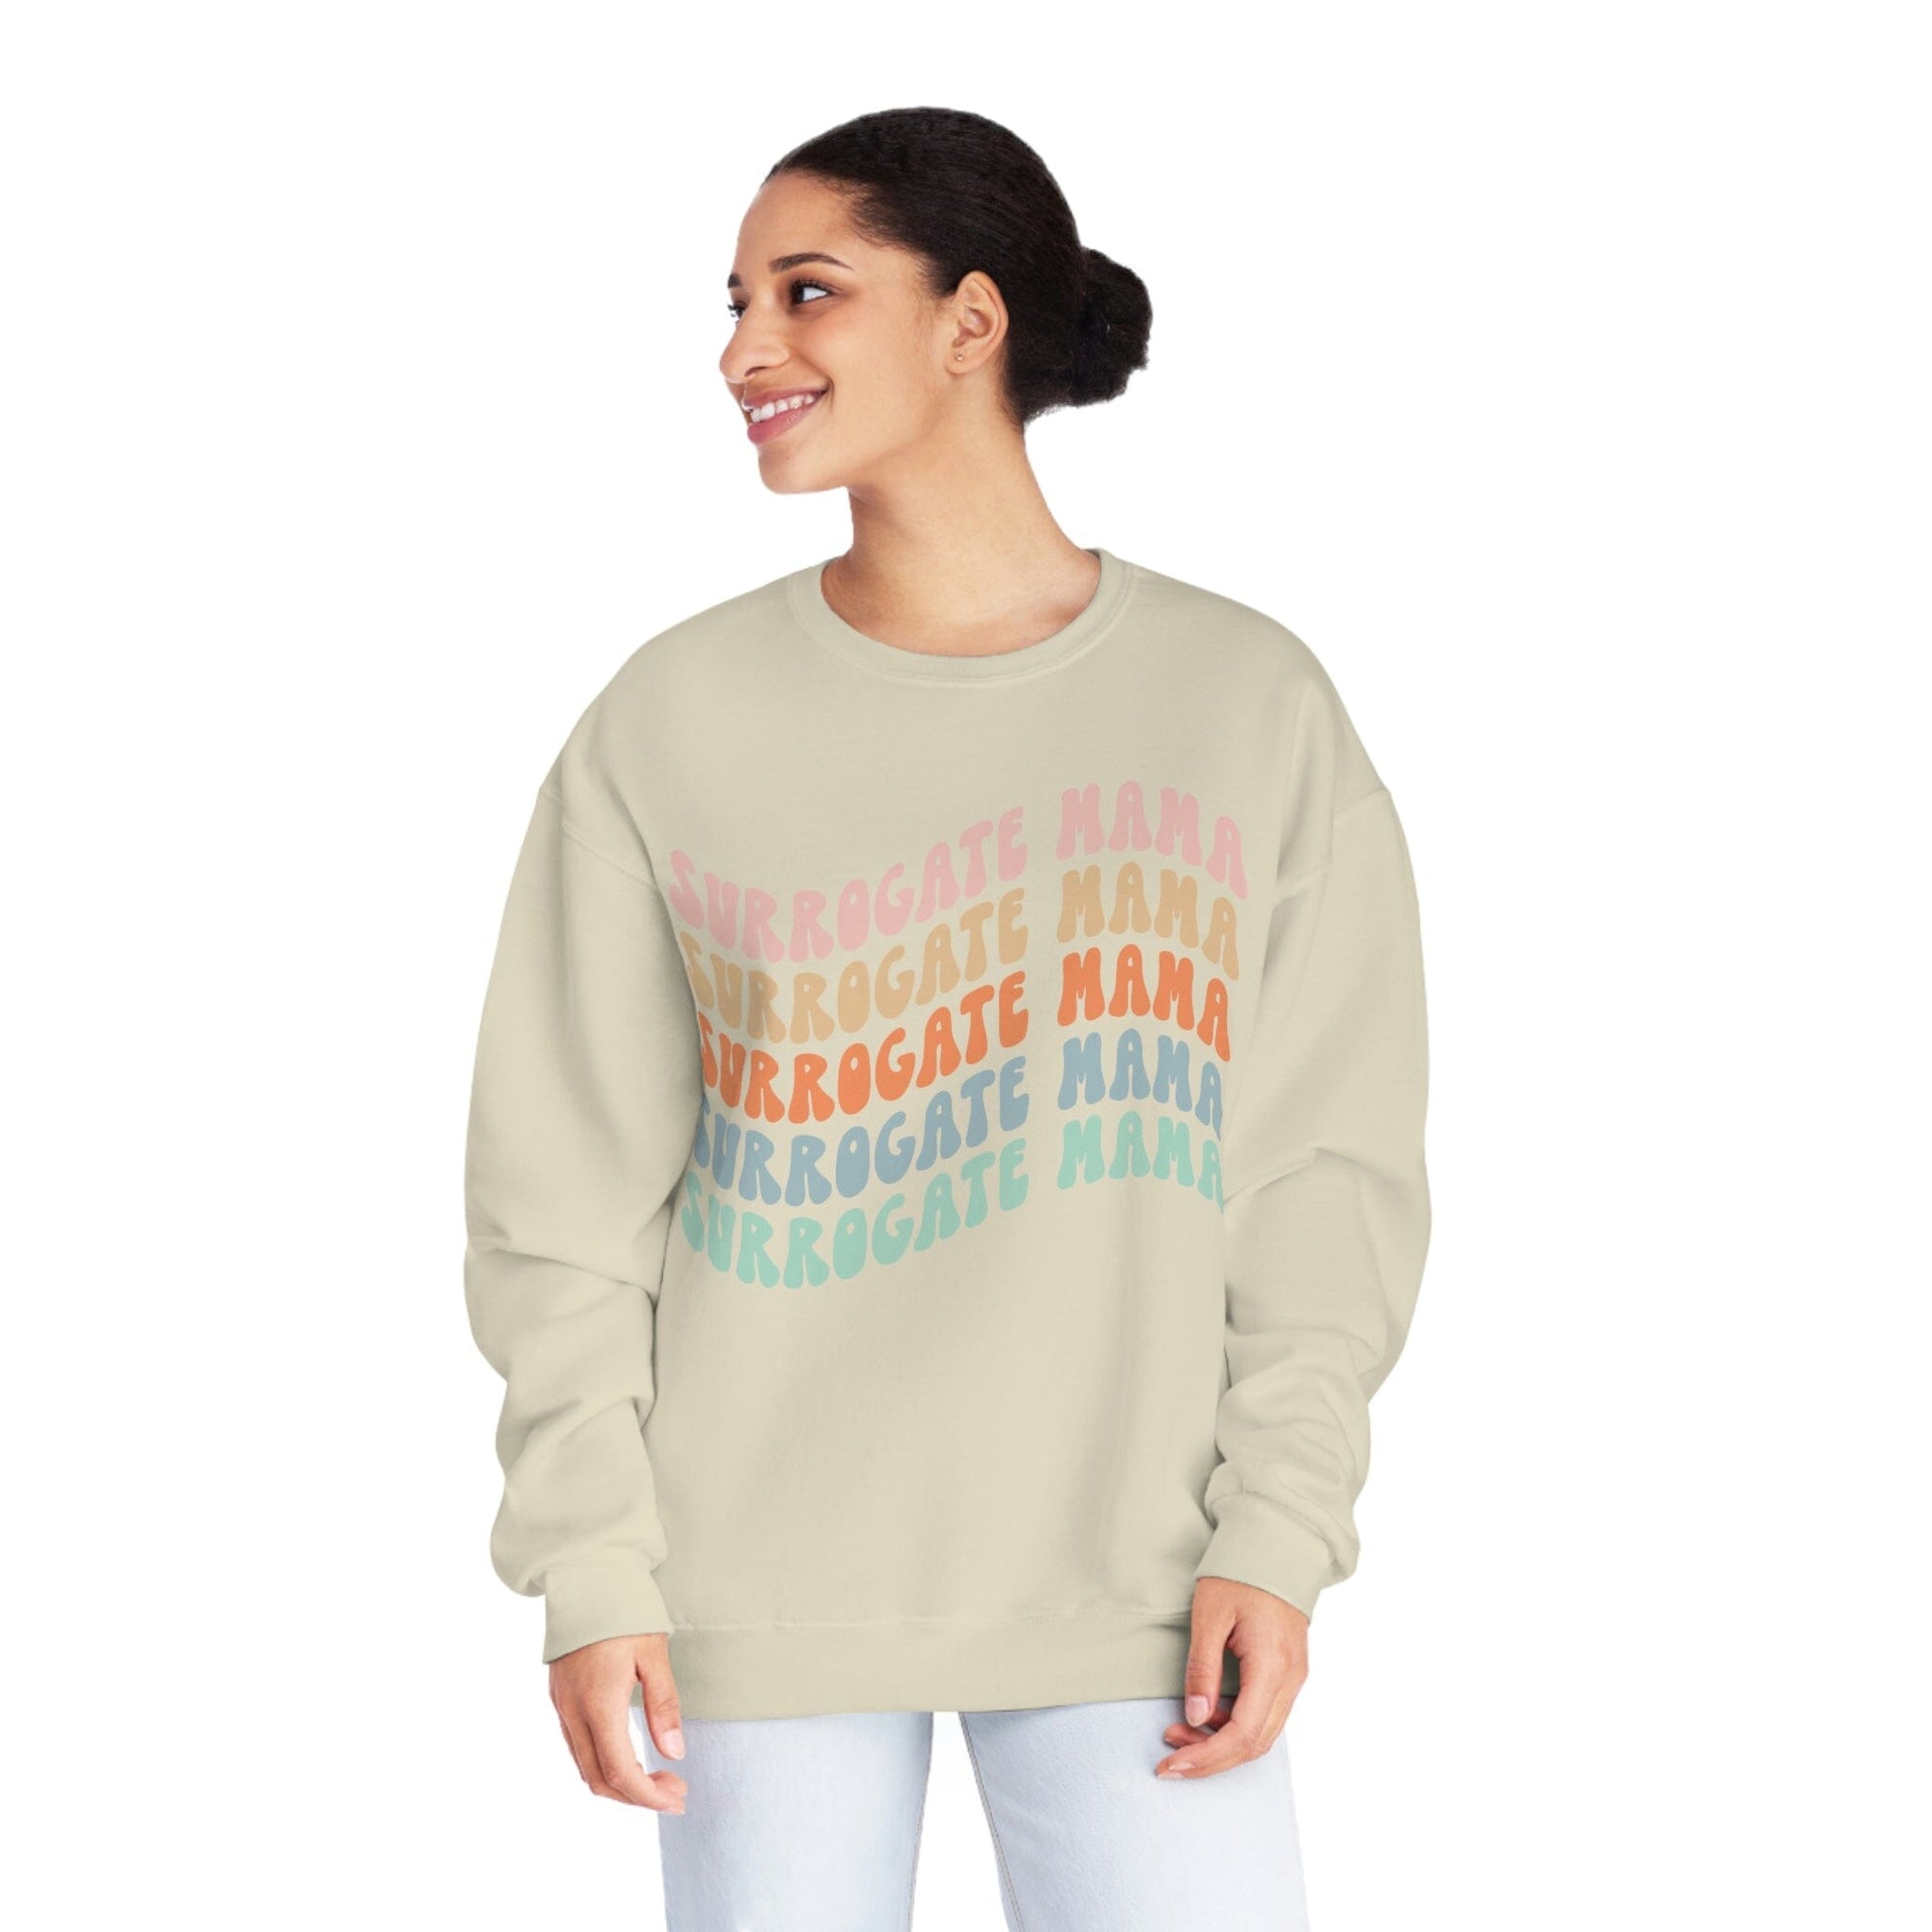 Surrogate Mama Sweatshirt | Gift for Surrogate Sweatshirt Printify 